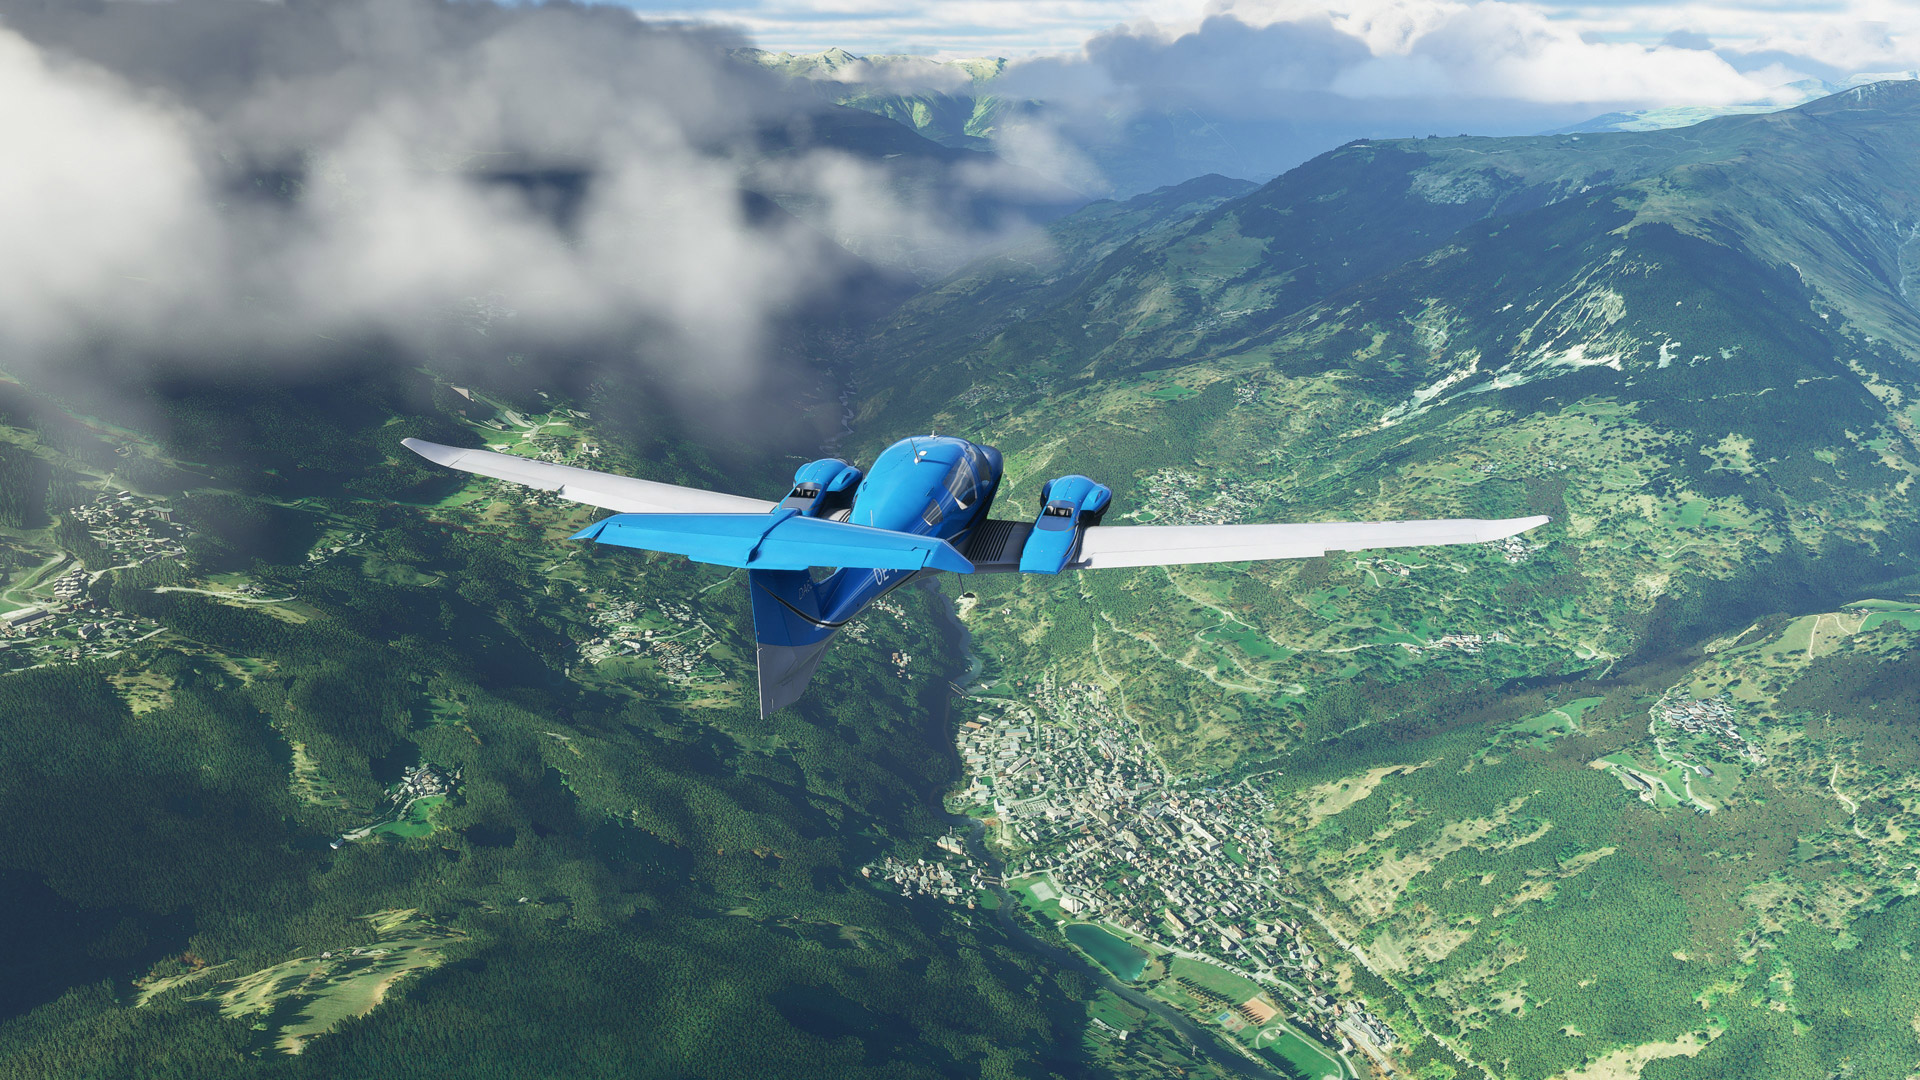 Free Microsoft Flight Simulator (2020) Wallpaper in 1920x1080